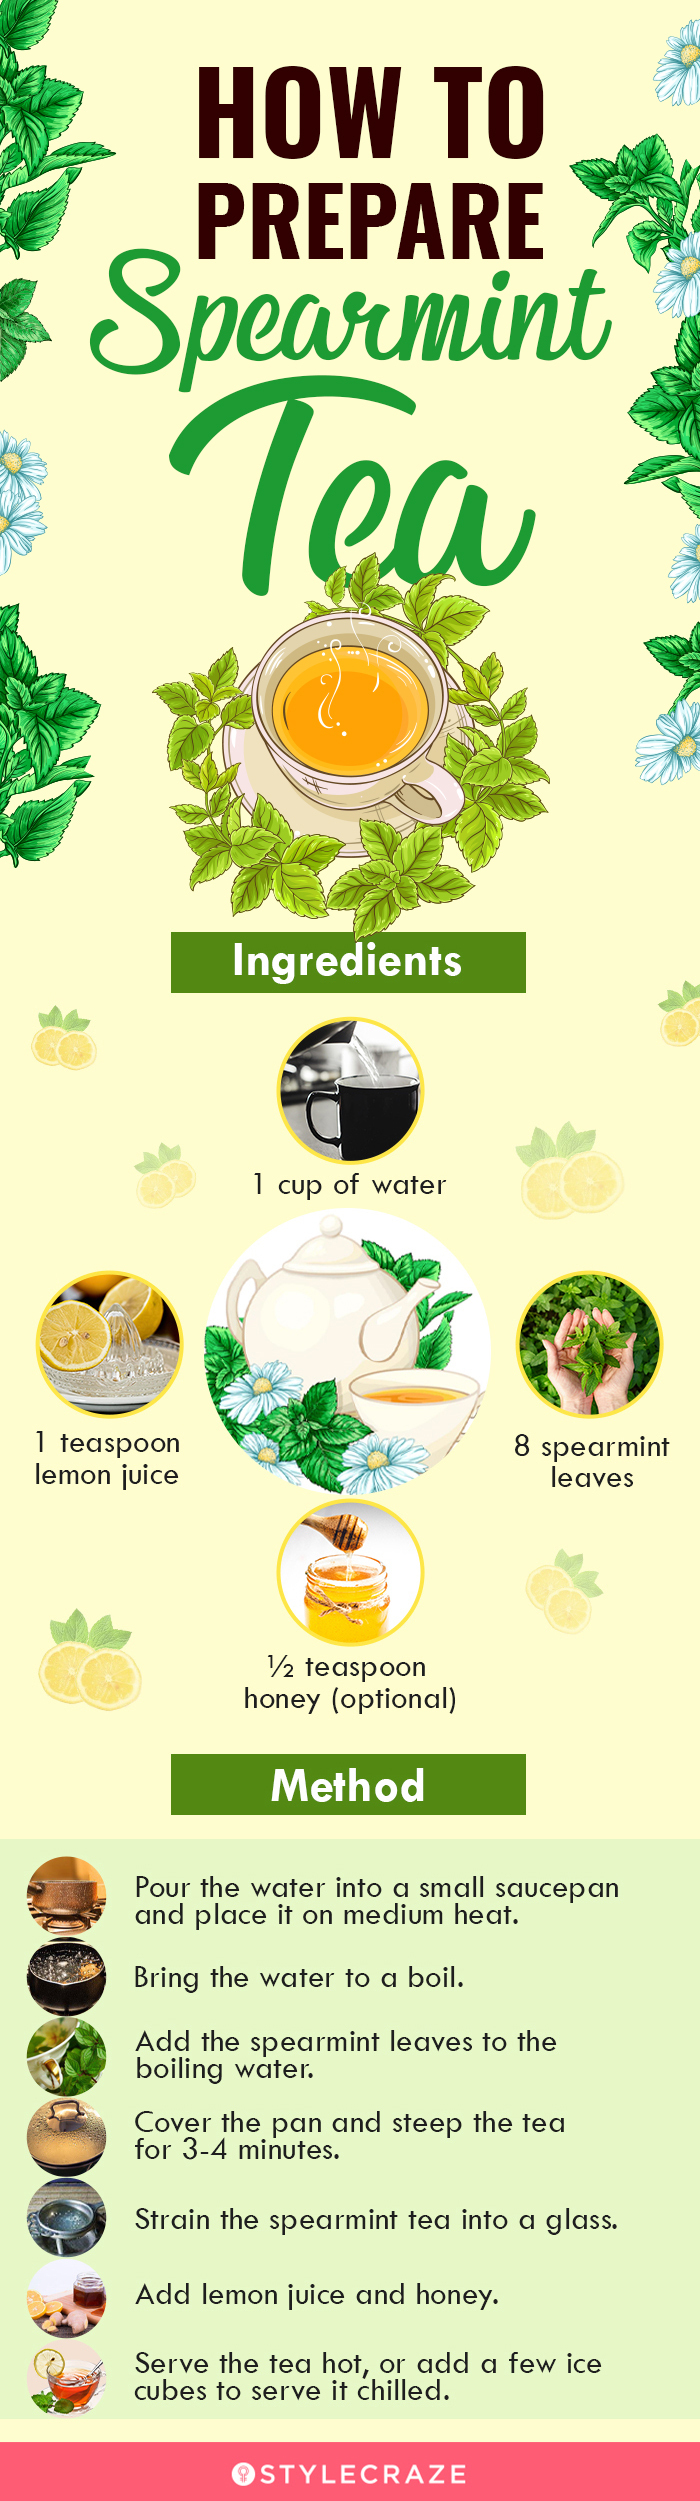 how to prepare spearmint tea (infographic)